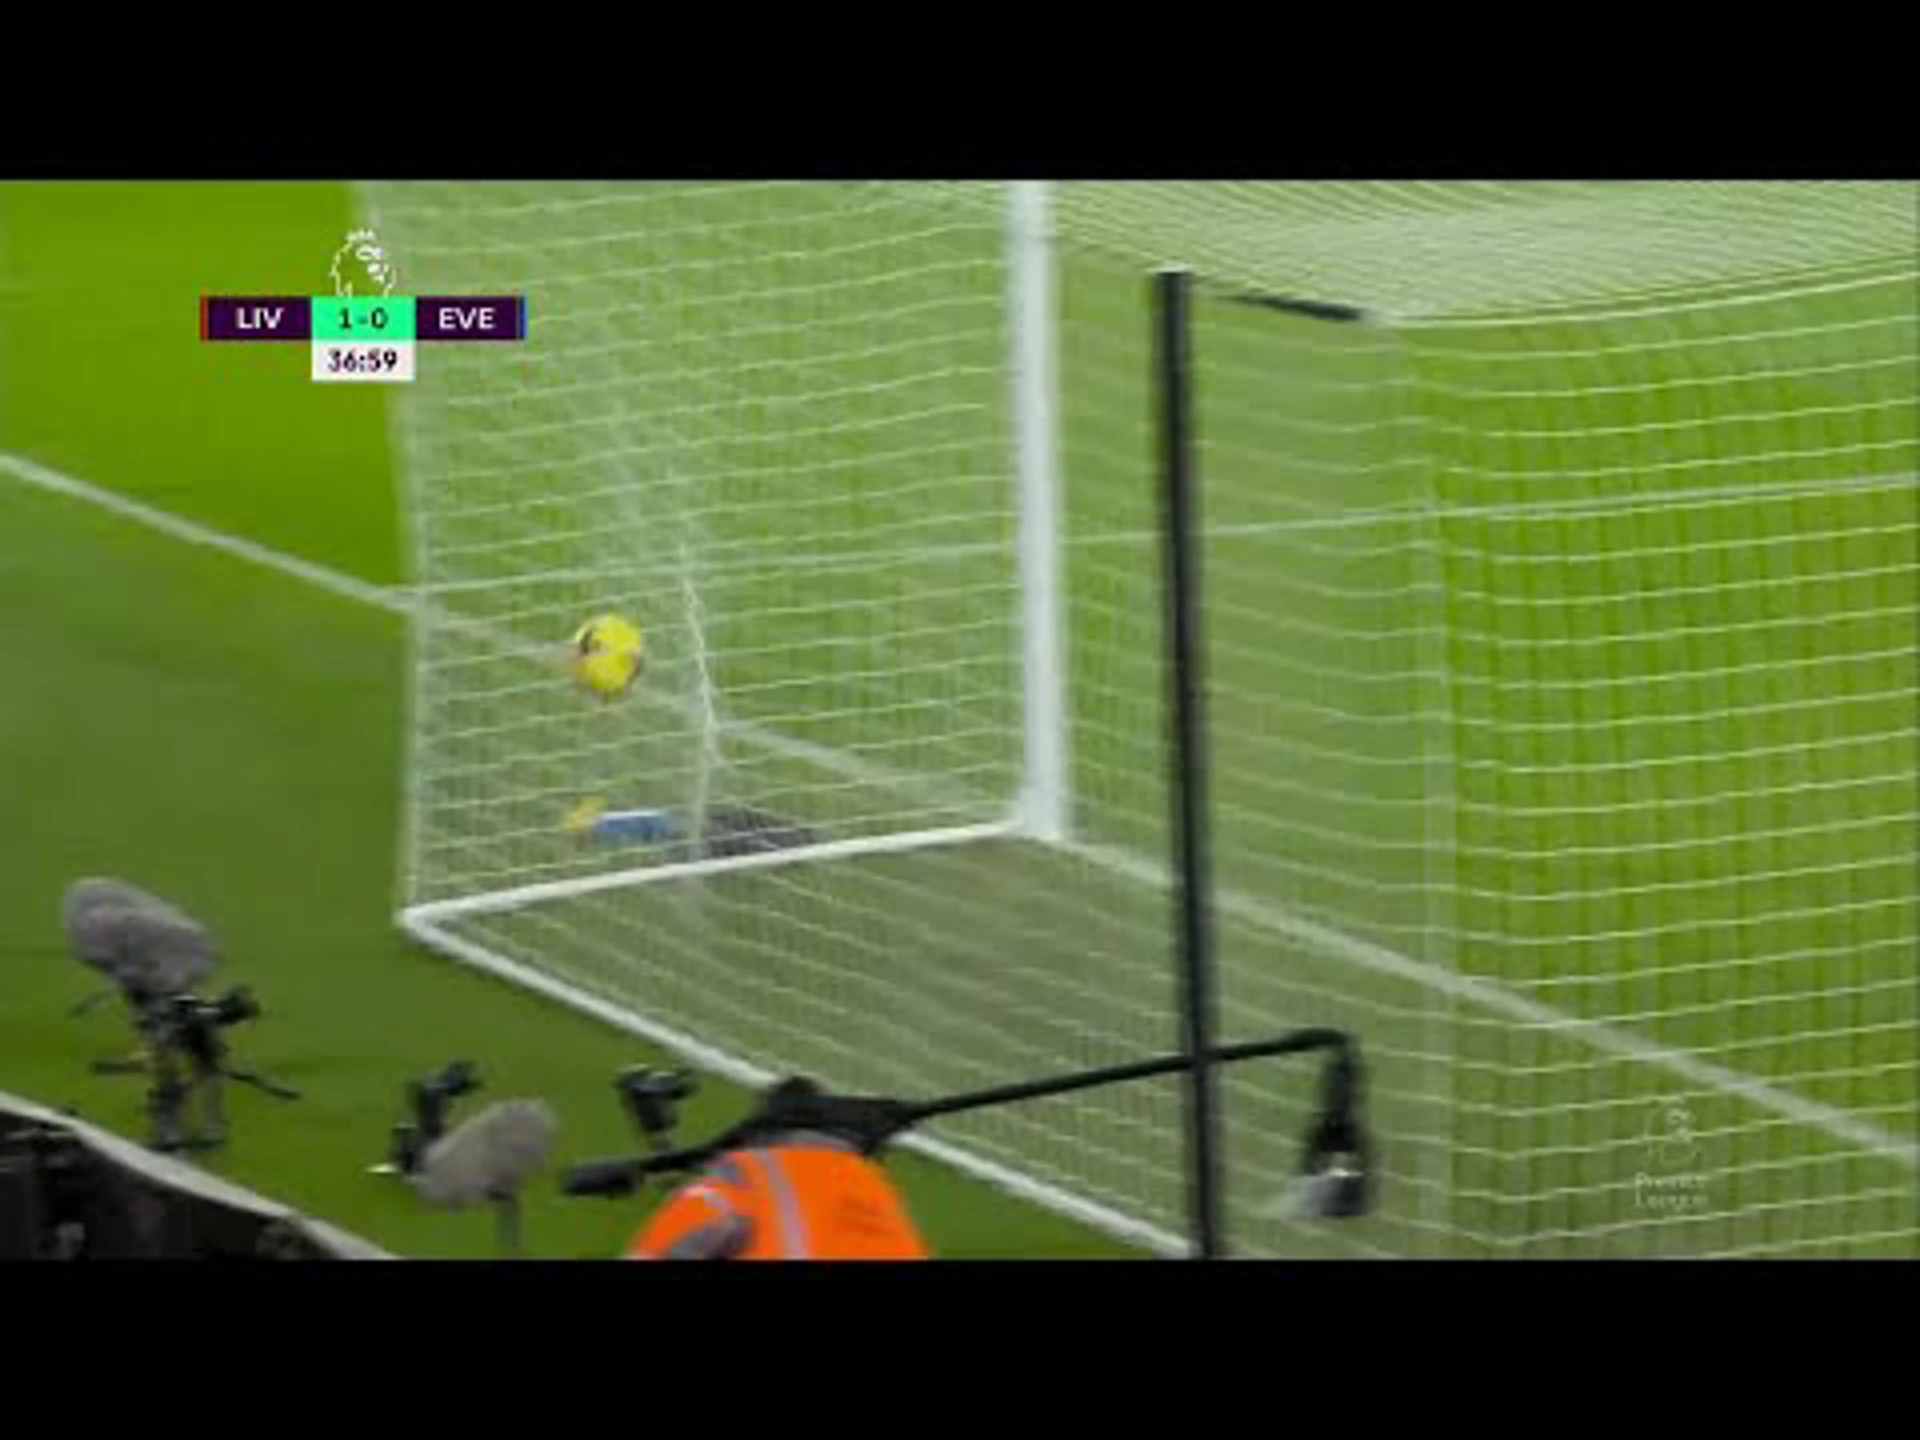 Mohamed Salah with a Goal vs. Everton